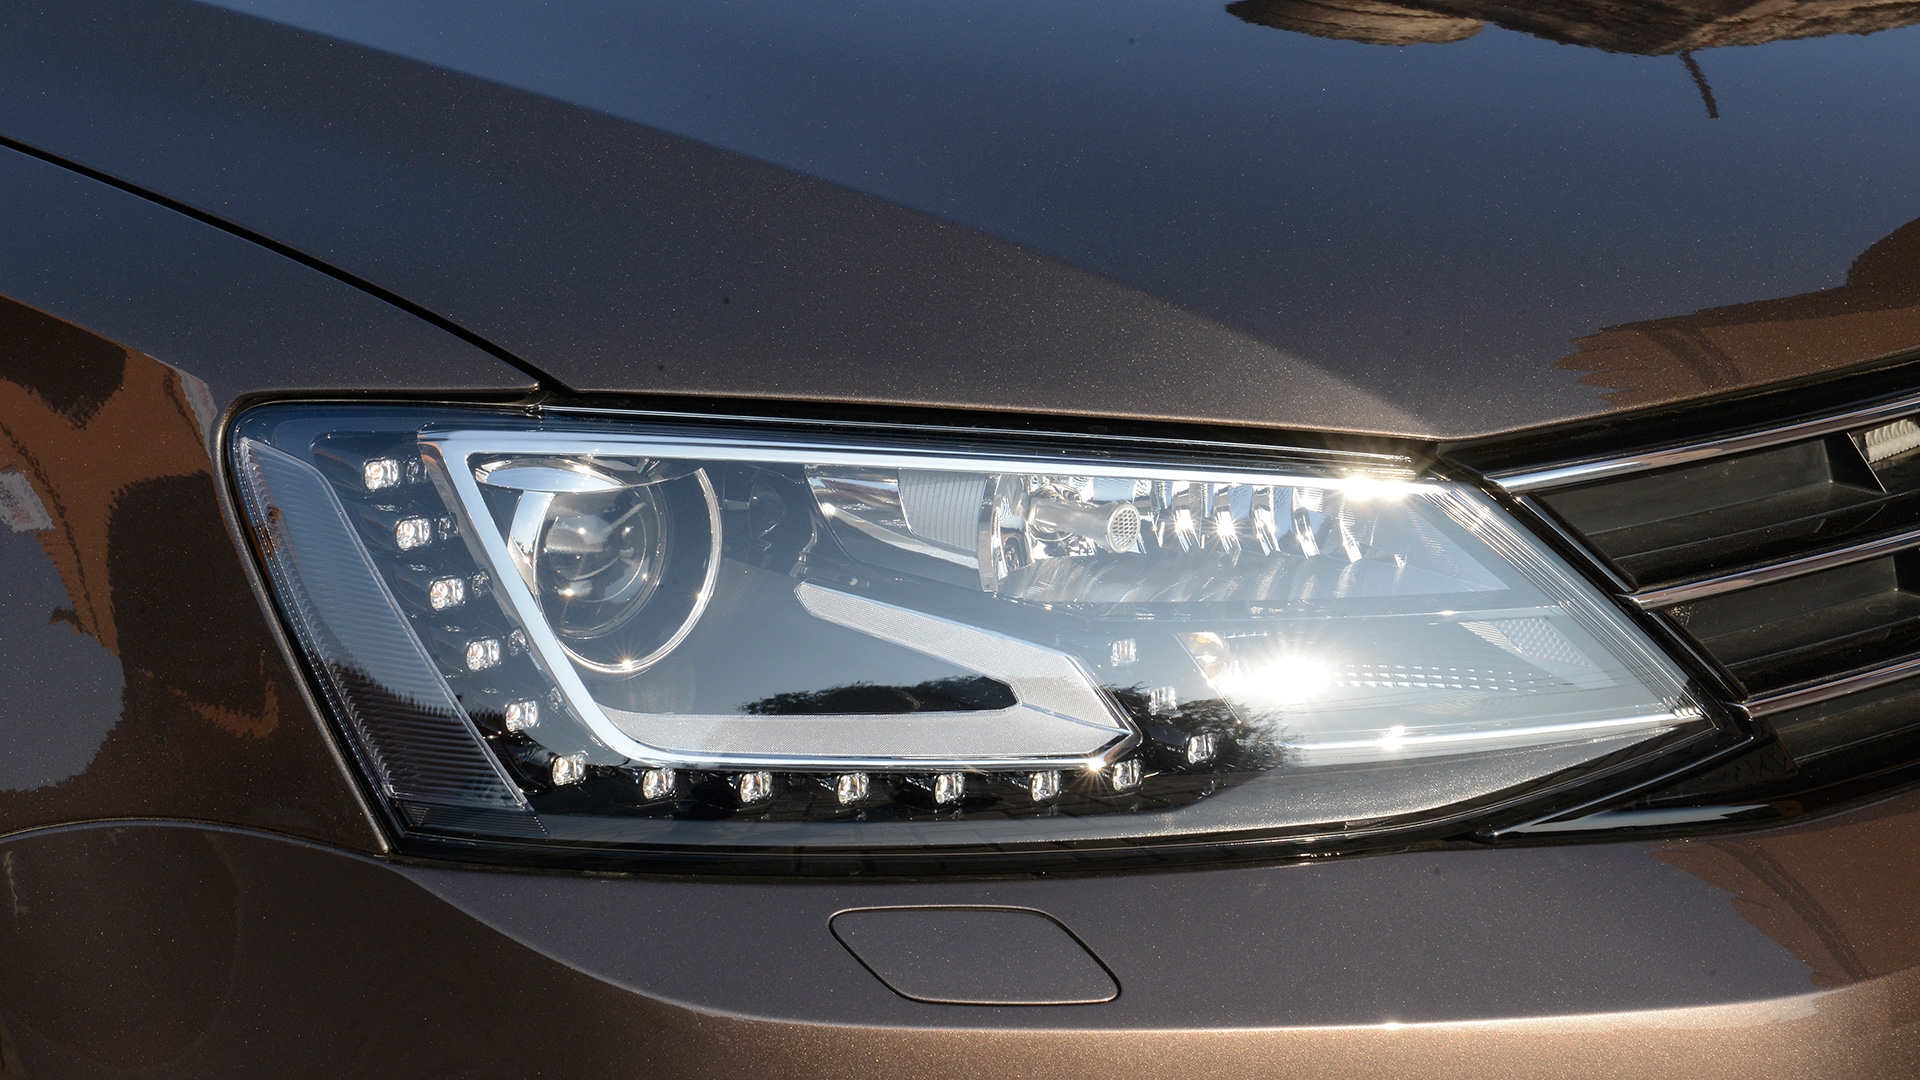 Volkswagen Jetta 2015 Interior Car Photos Overdrive